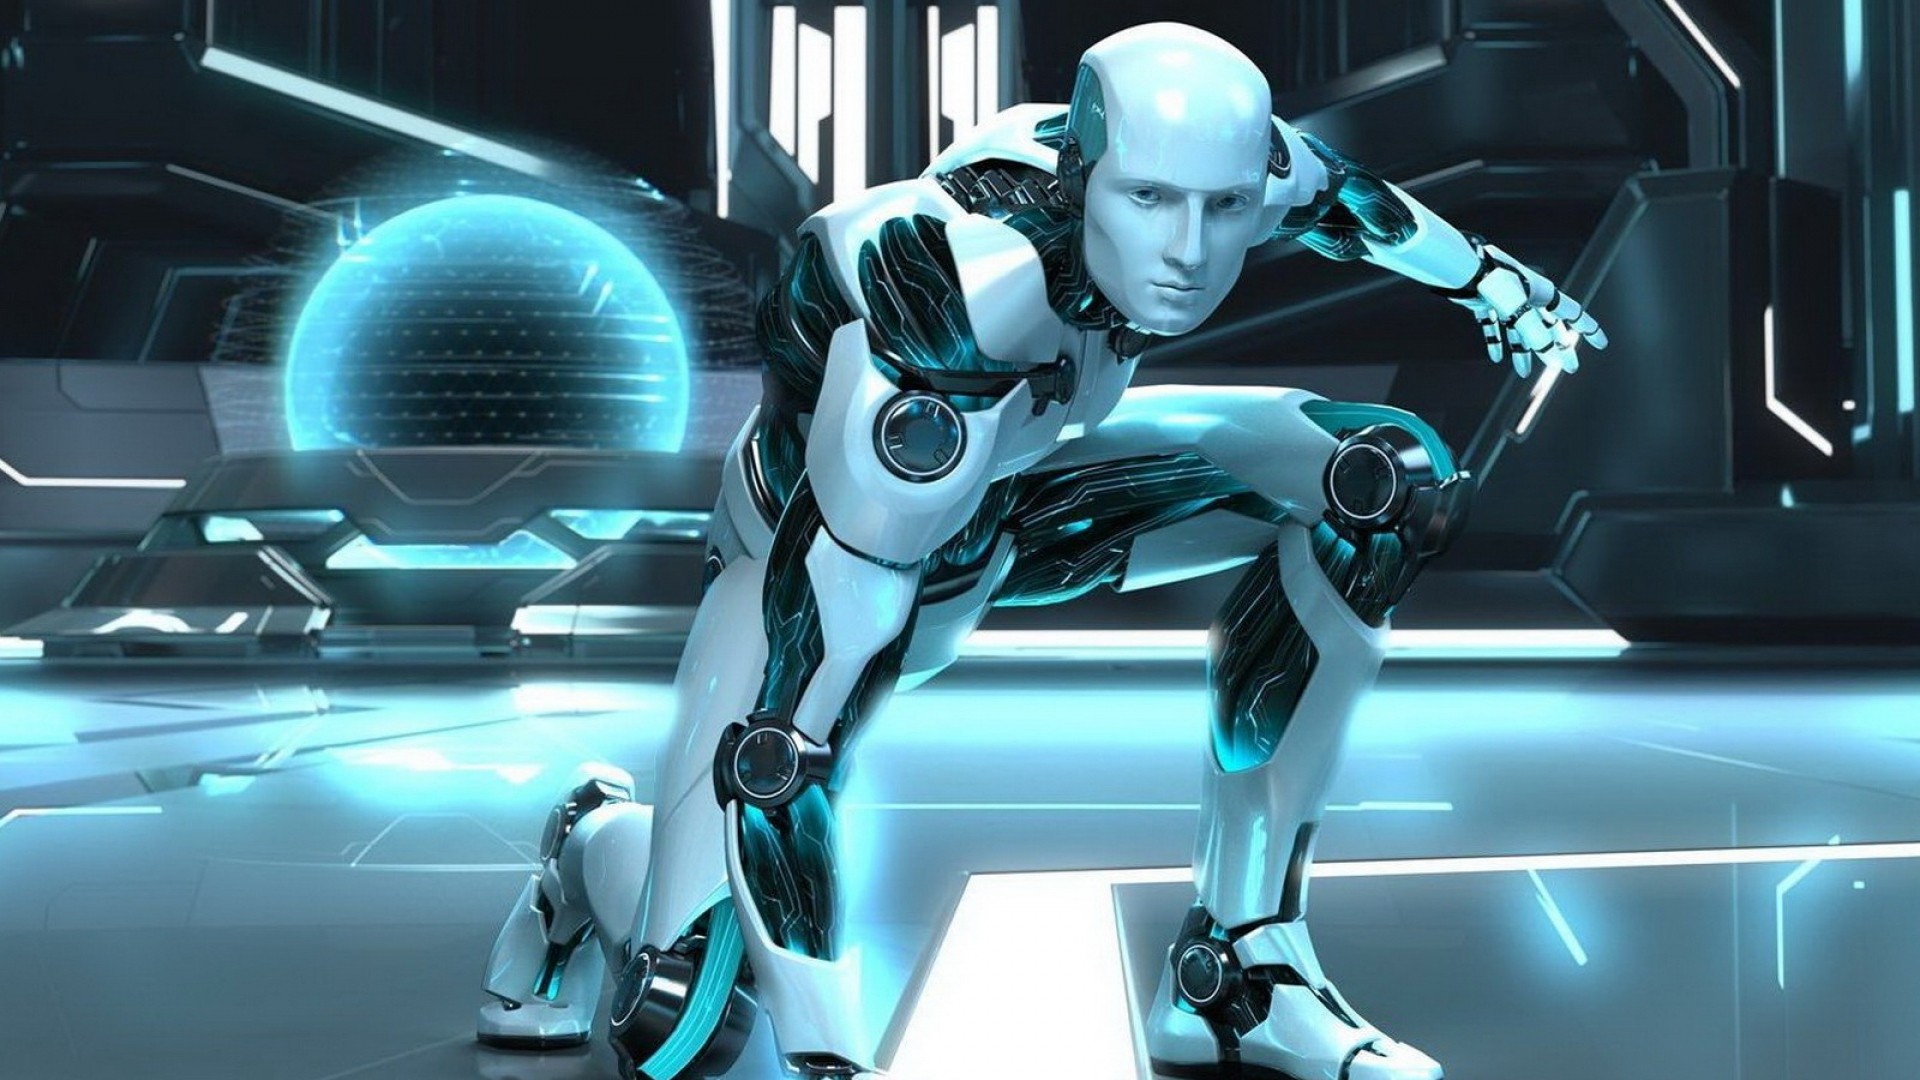 General 1920x1080 robot cyborg androids science fiction CGI digital art cyan